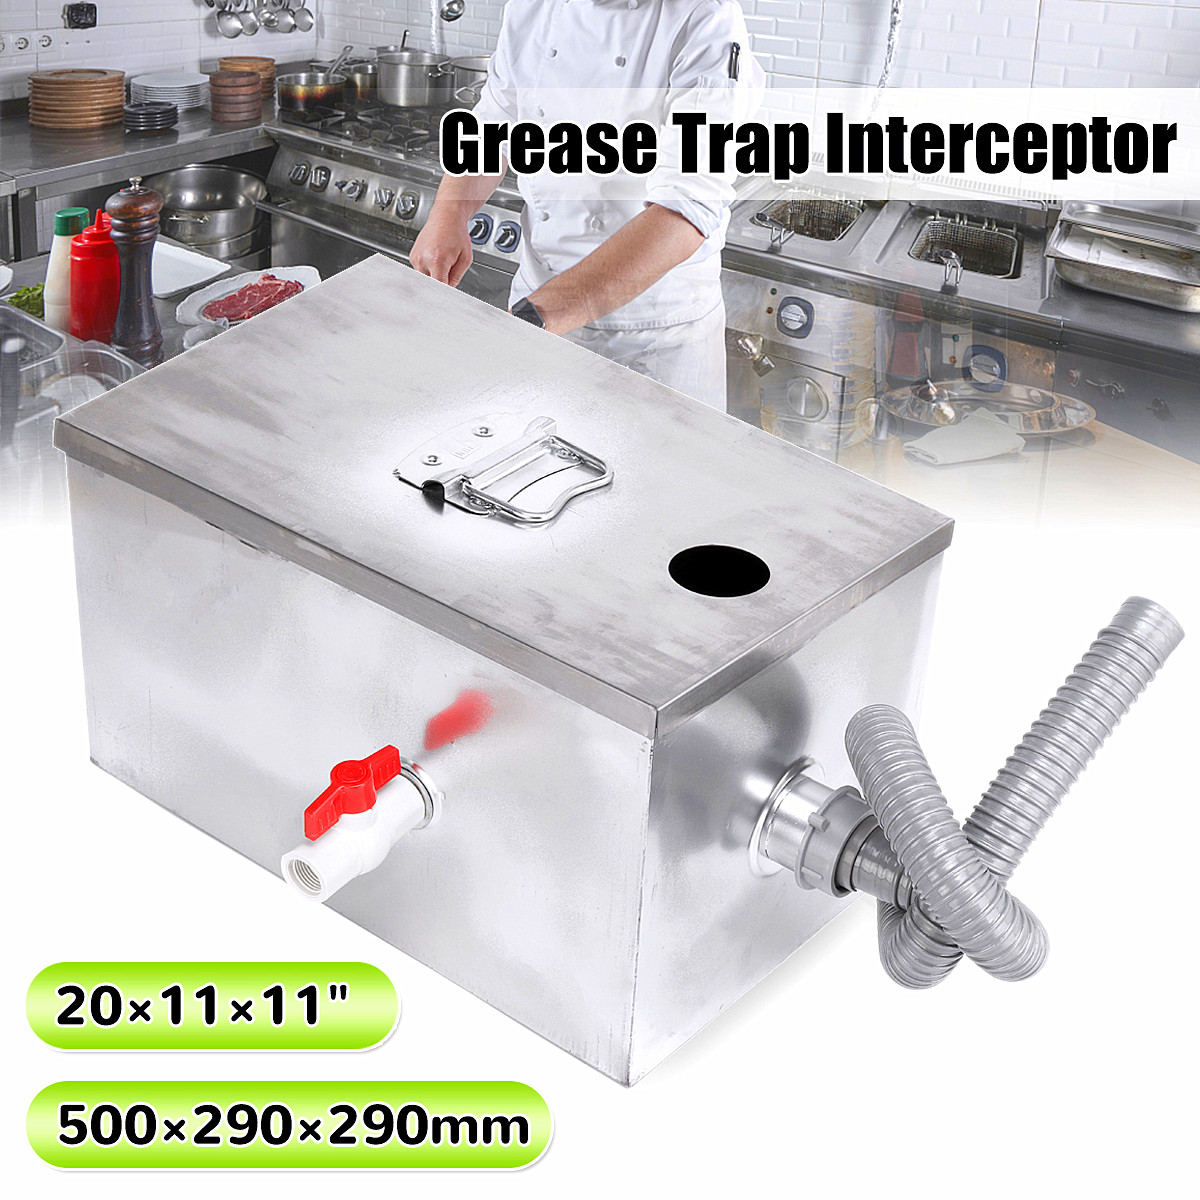 Stainless-Steel-Grease-Trap-Interceptor-500times290times290mm-Steel-Interceptor-Equipment-1411786